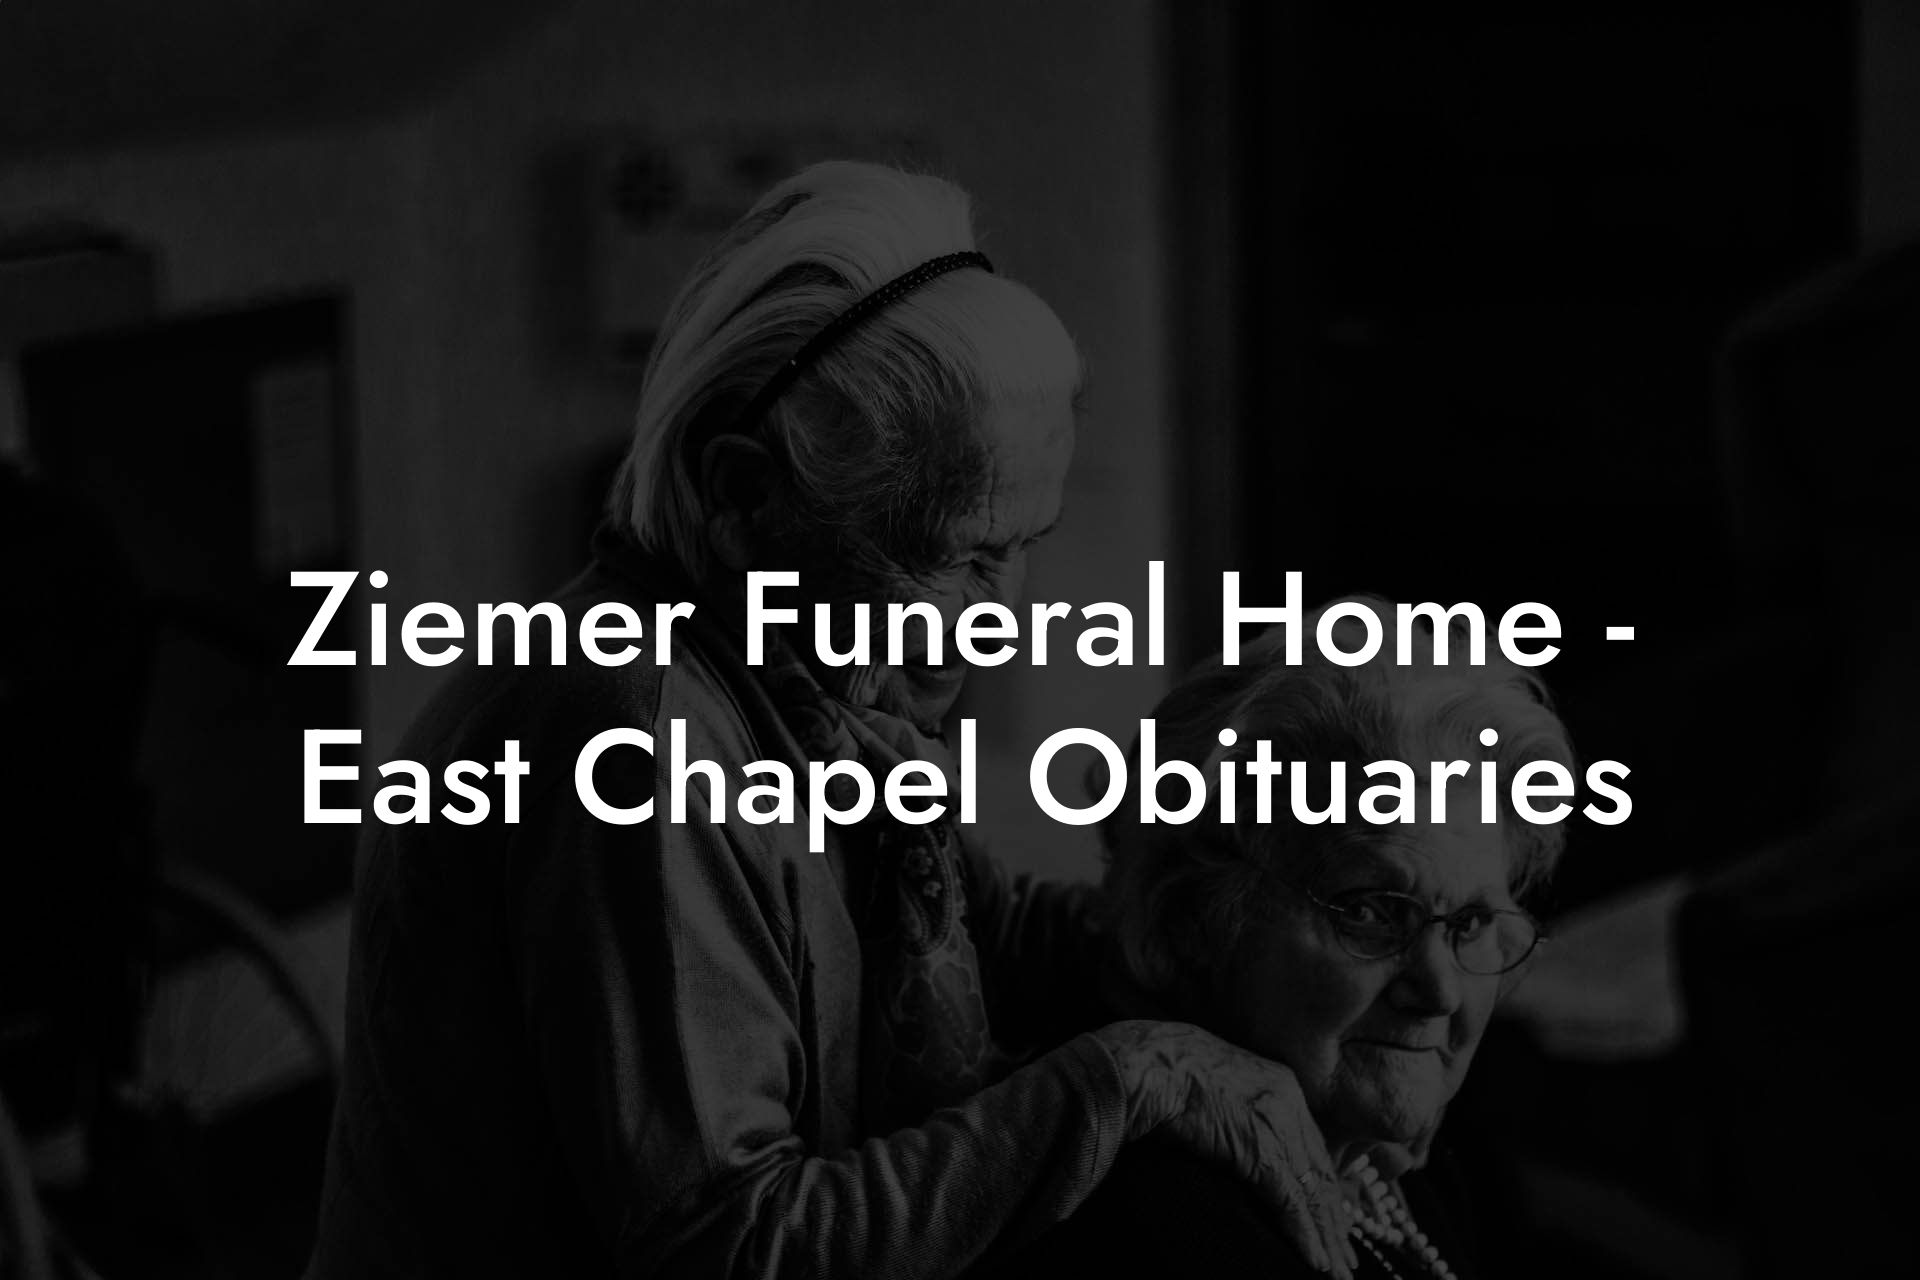 Ziemer Funeral Home - East Chapel Obituaries